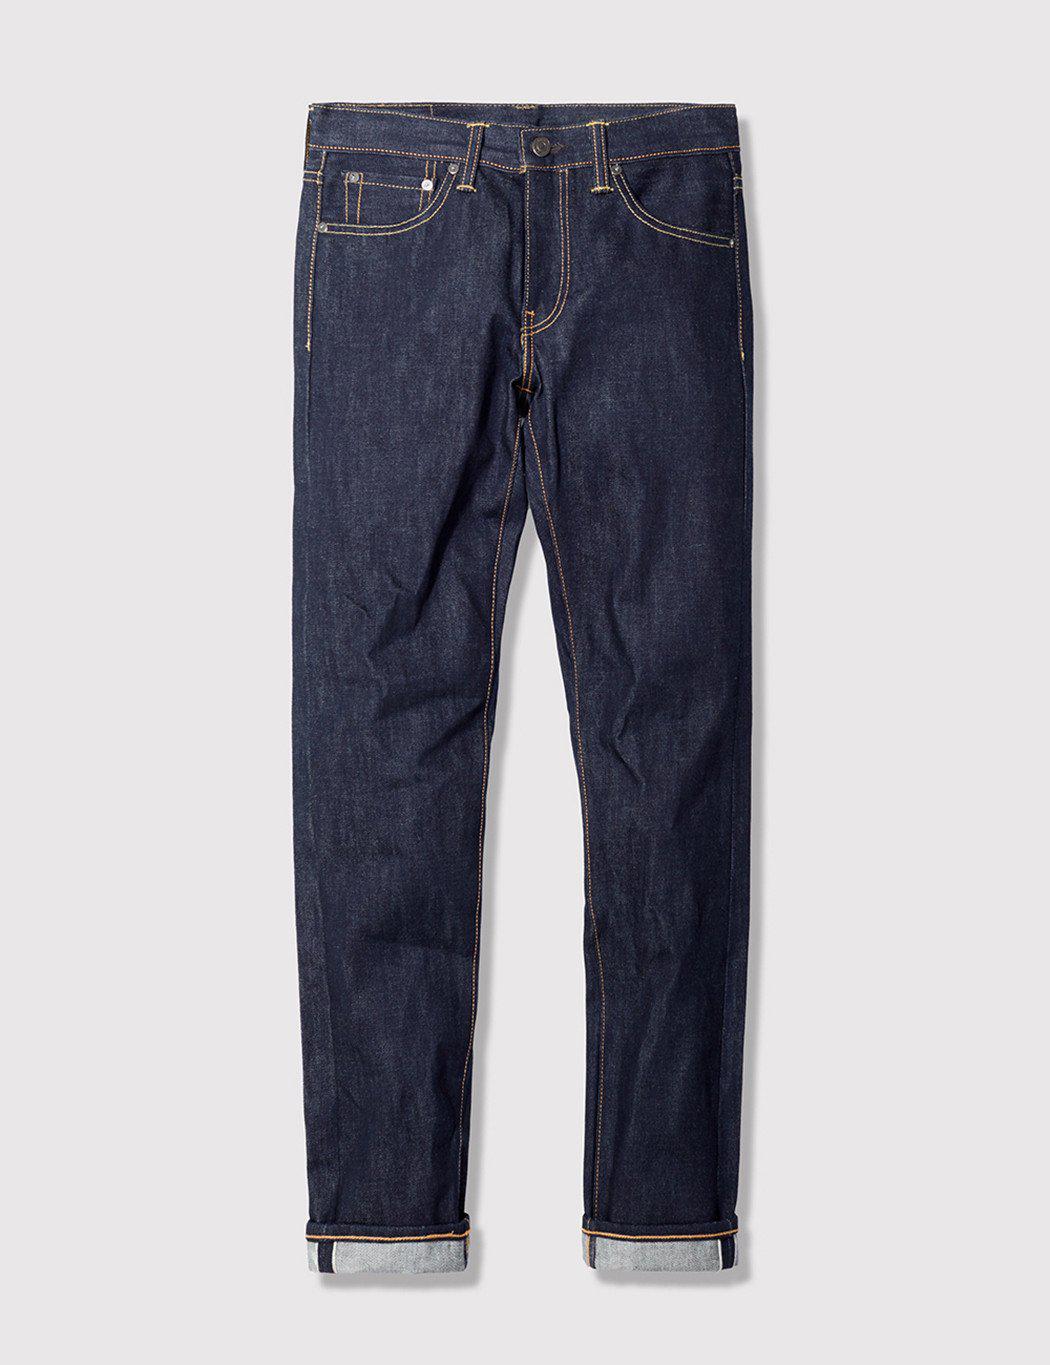 Lyst - Levi's 511 Selvedge Raw Jeans (slim) in Blue for Men